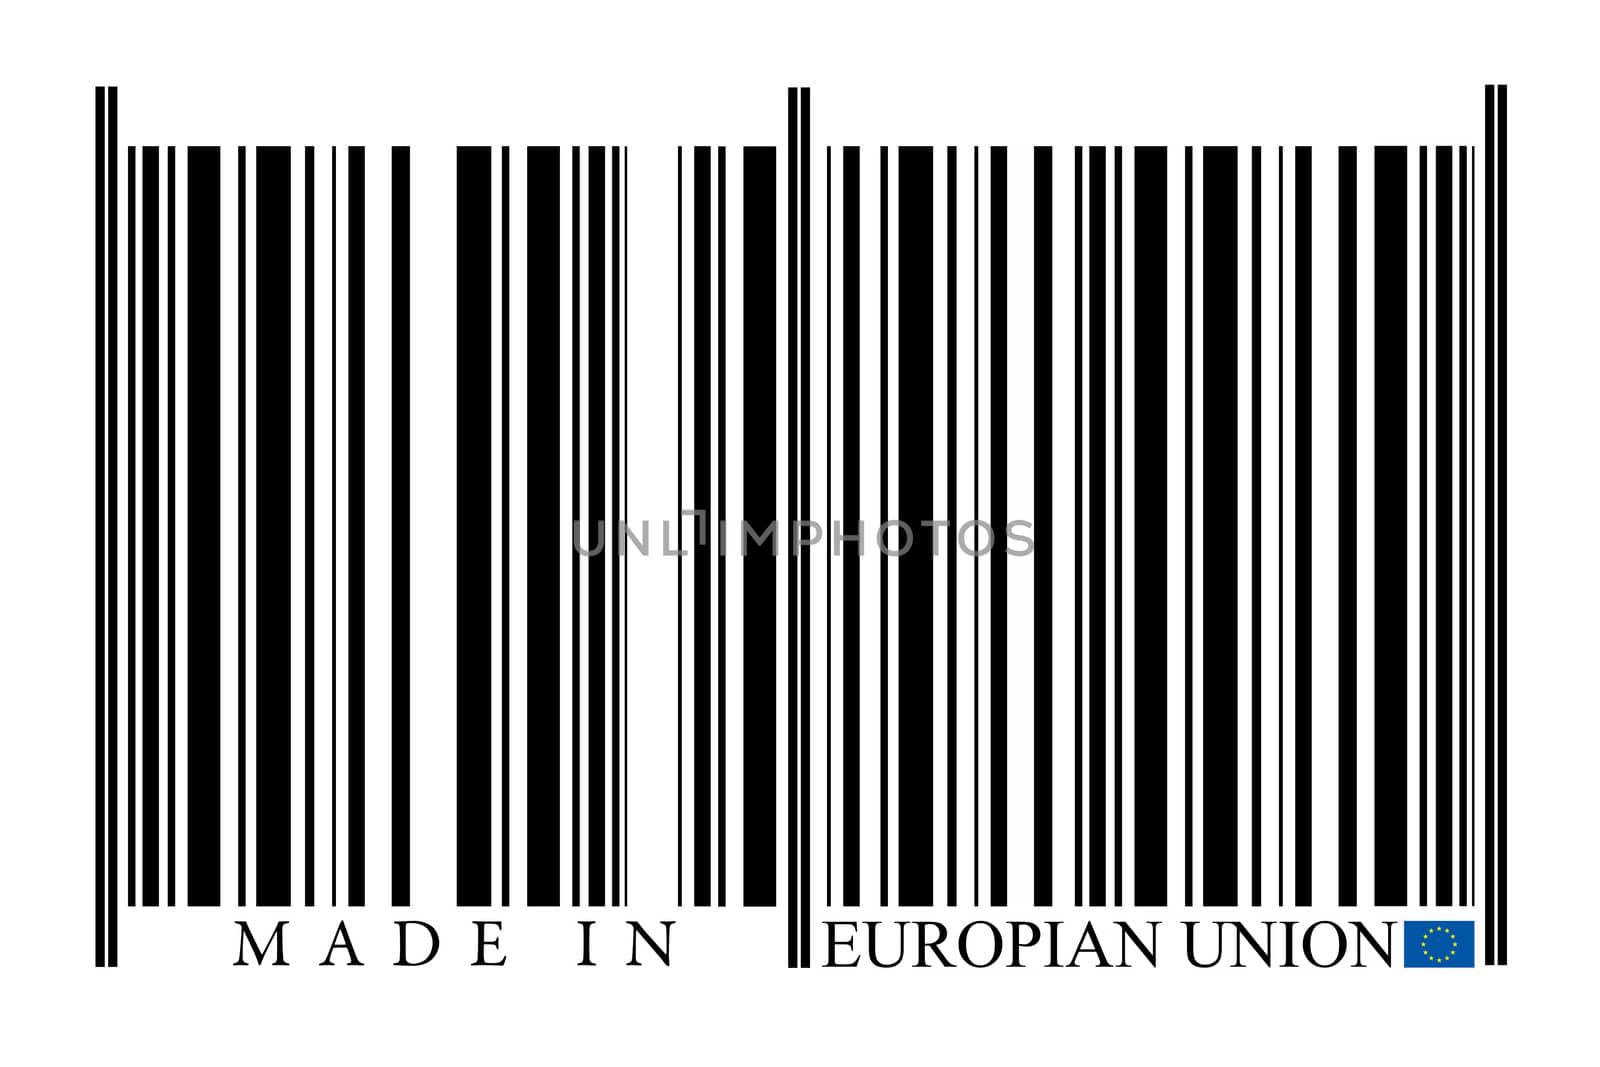 European Union Barcode by gemenacom